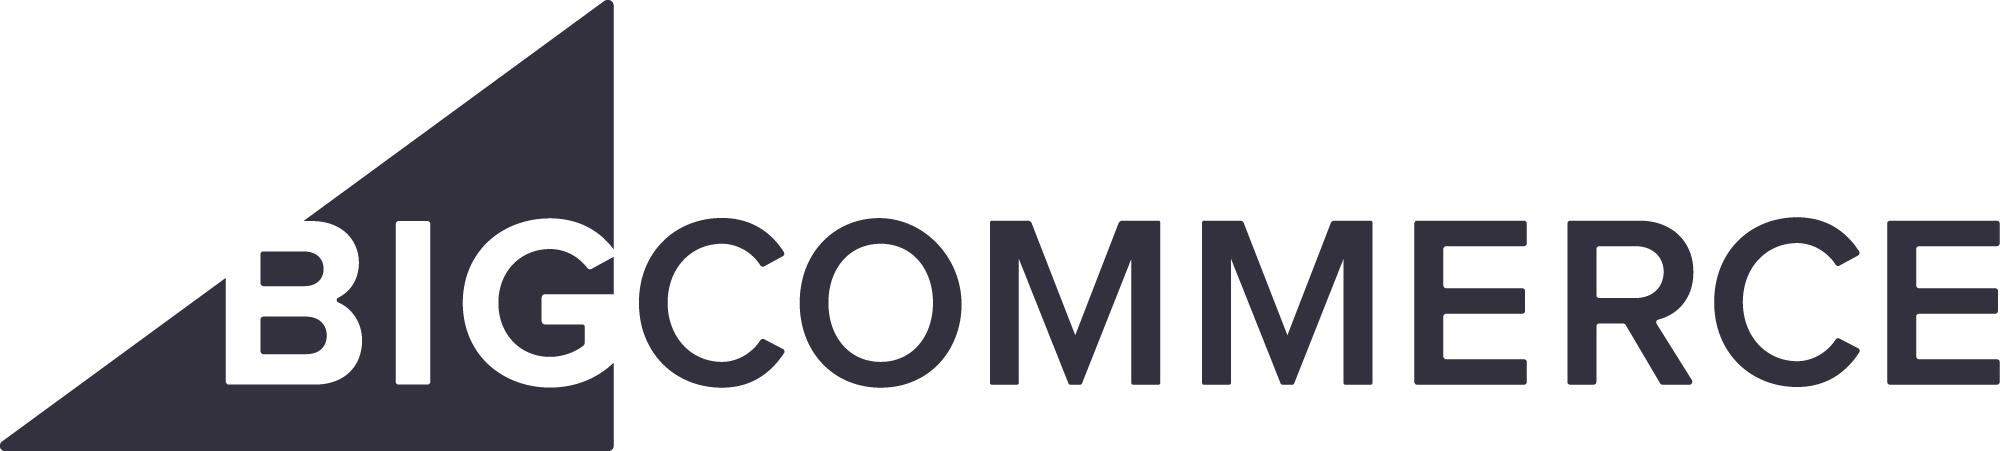 BigCommerce logo link